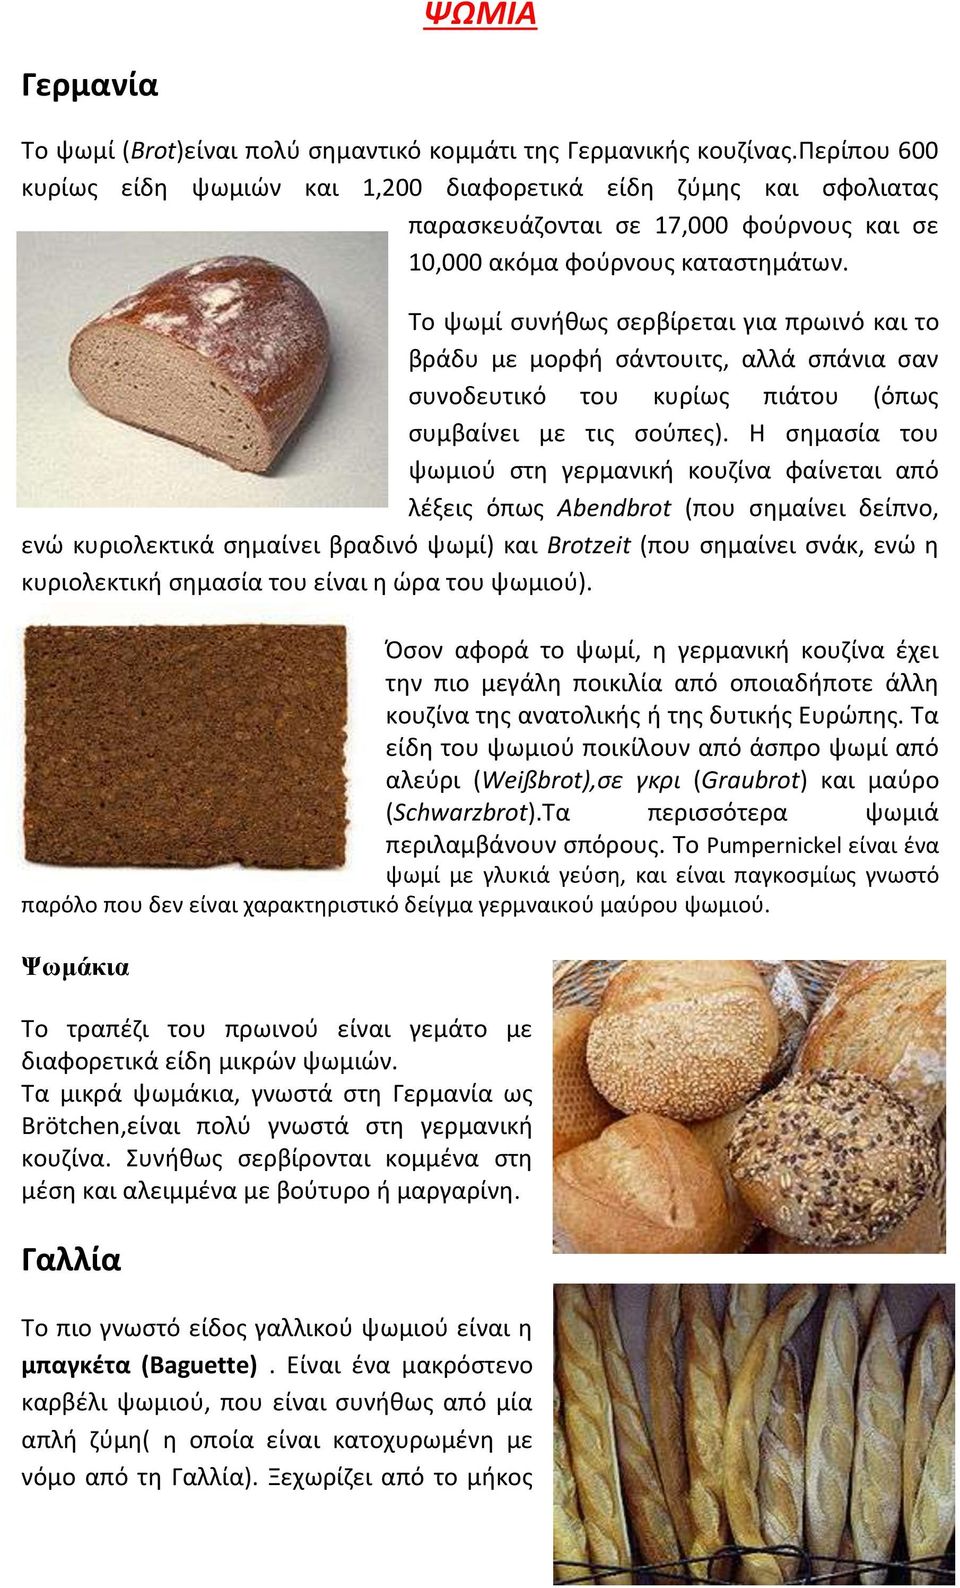 To ψωμί συνήθως σερβίρεται για πρωινό και το βράδυ με μορφή σάντουιτς, αλλά σπάνια σαν συνοδευτικό του κυρίως πιάτου (όπως συμβαίνει με τις σούπες).